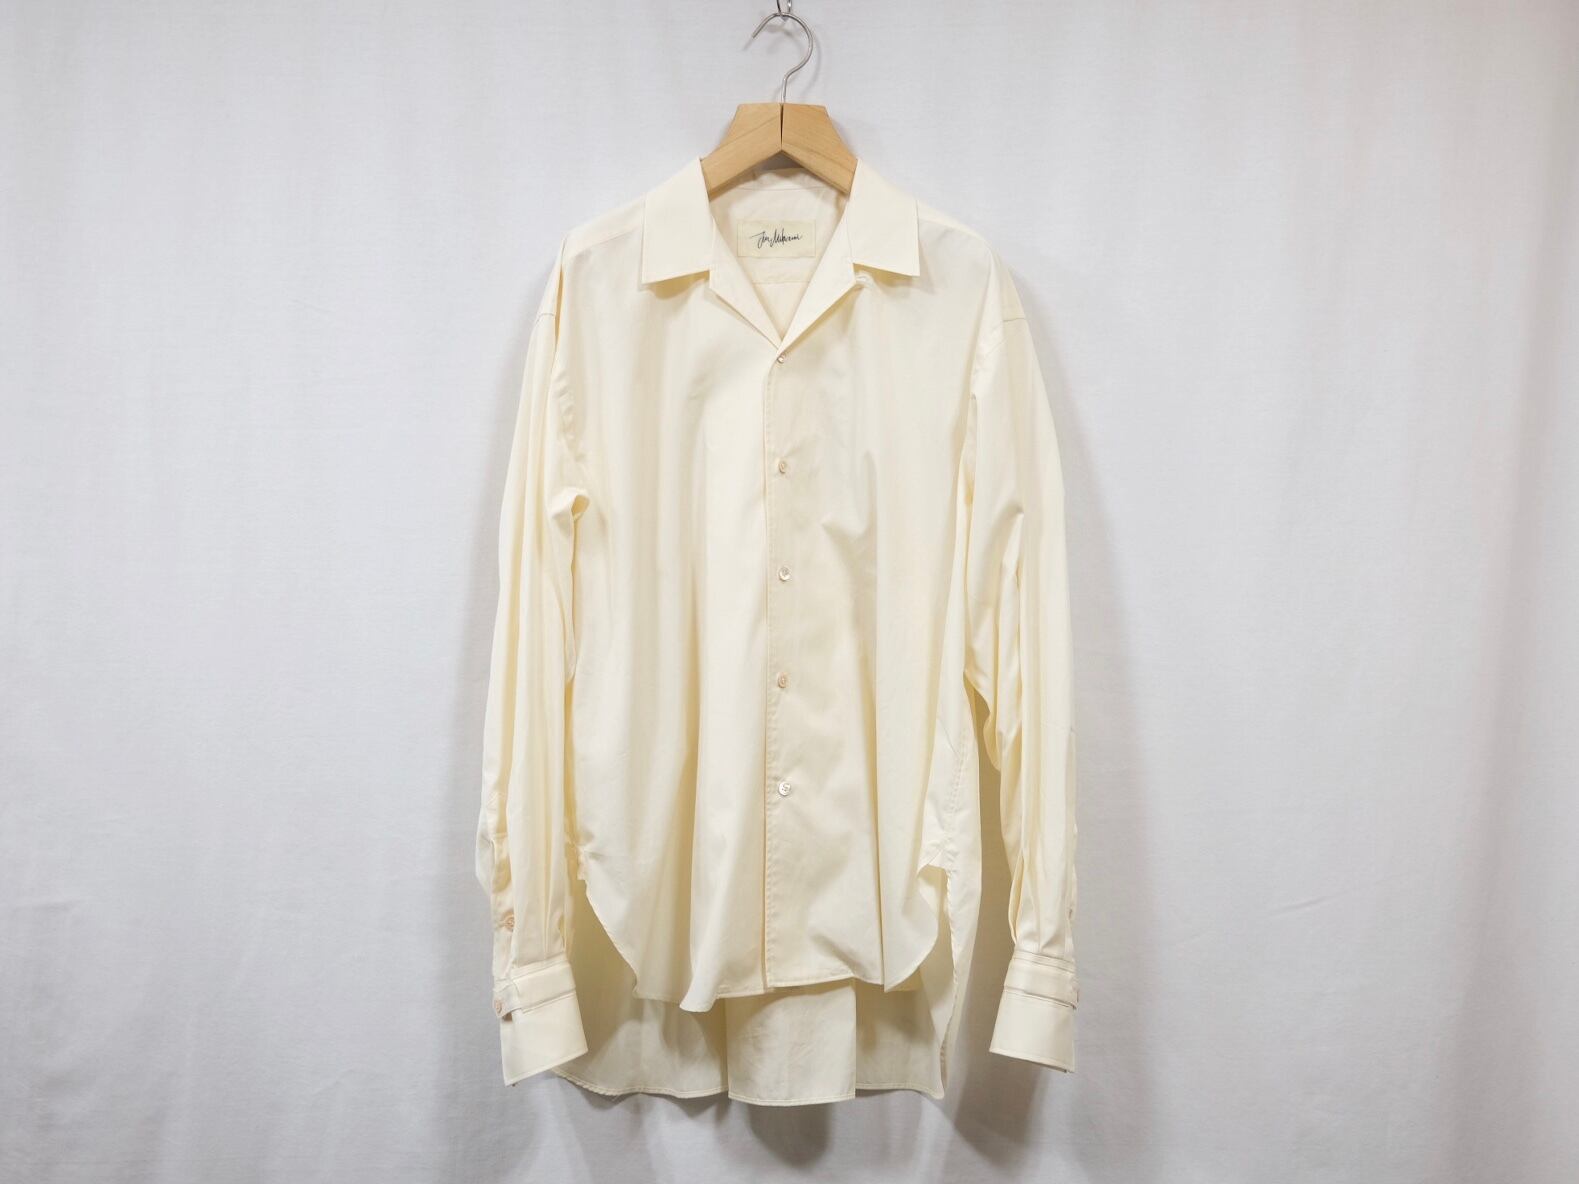 JUN MIKAMI “オープンカラーシャツ” Cream | Lapel online store powered by BASE